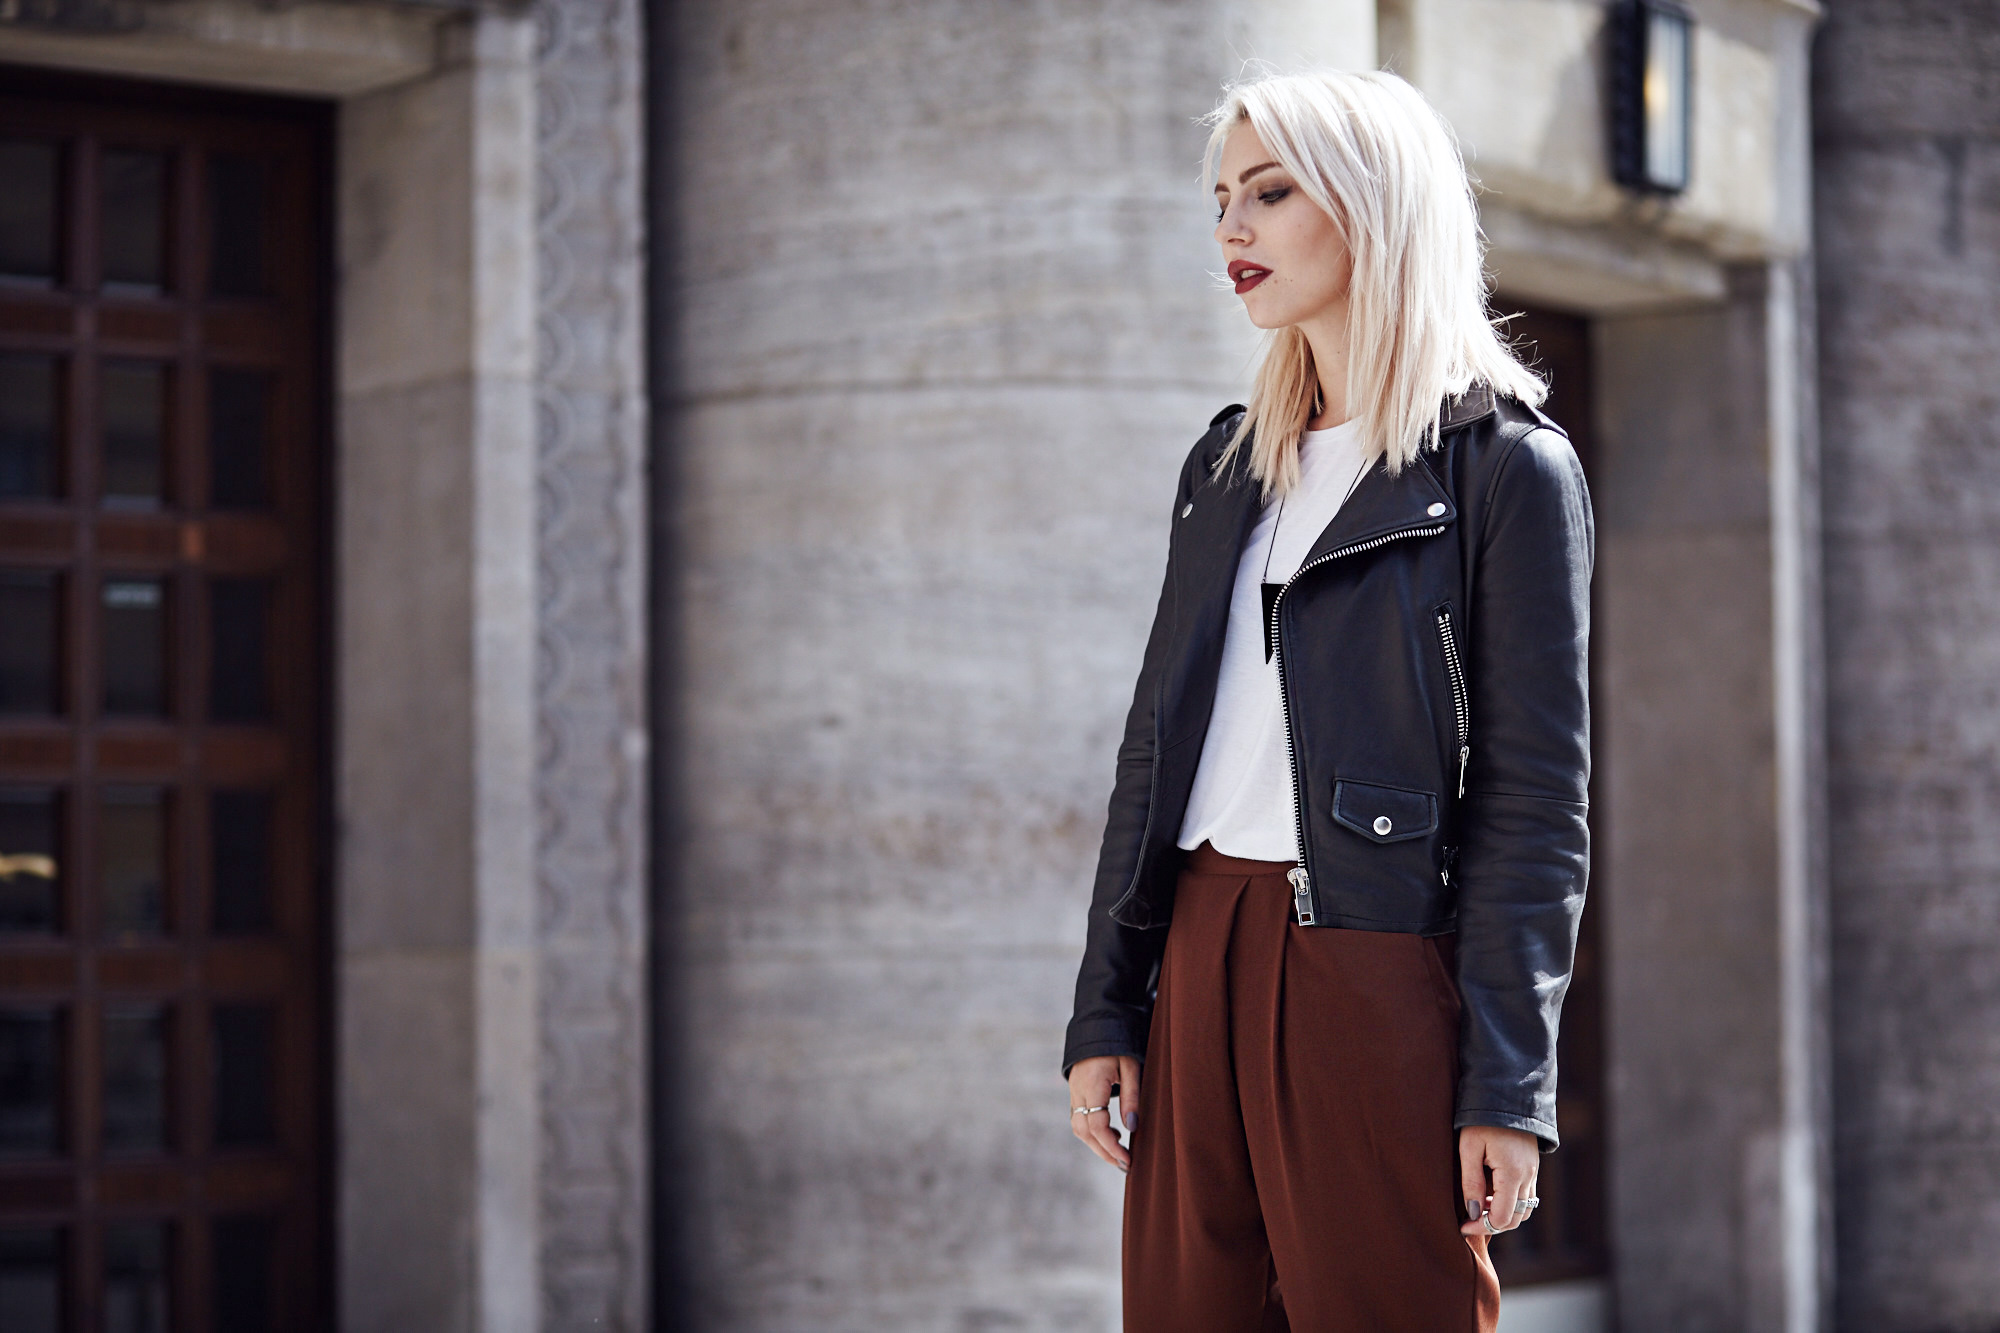 Fall Fashion | wearing brown Zara pants, Mango leather jacket and Mules | Berlin Street Style via Masha Sedgwick